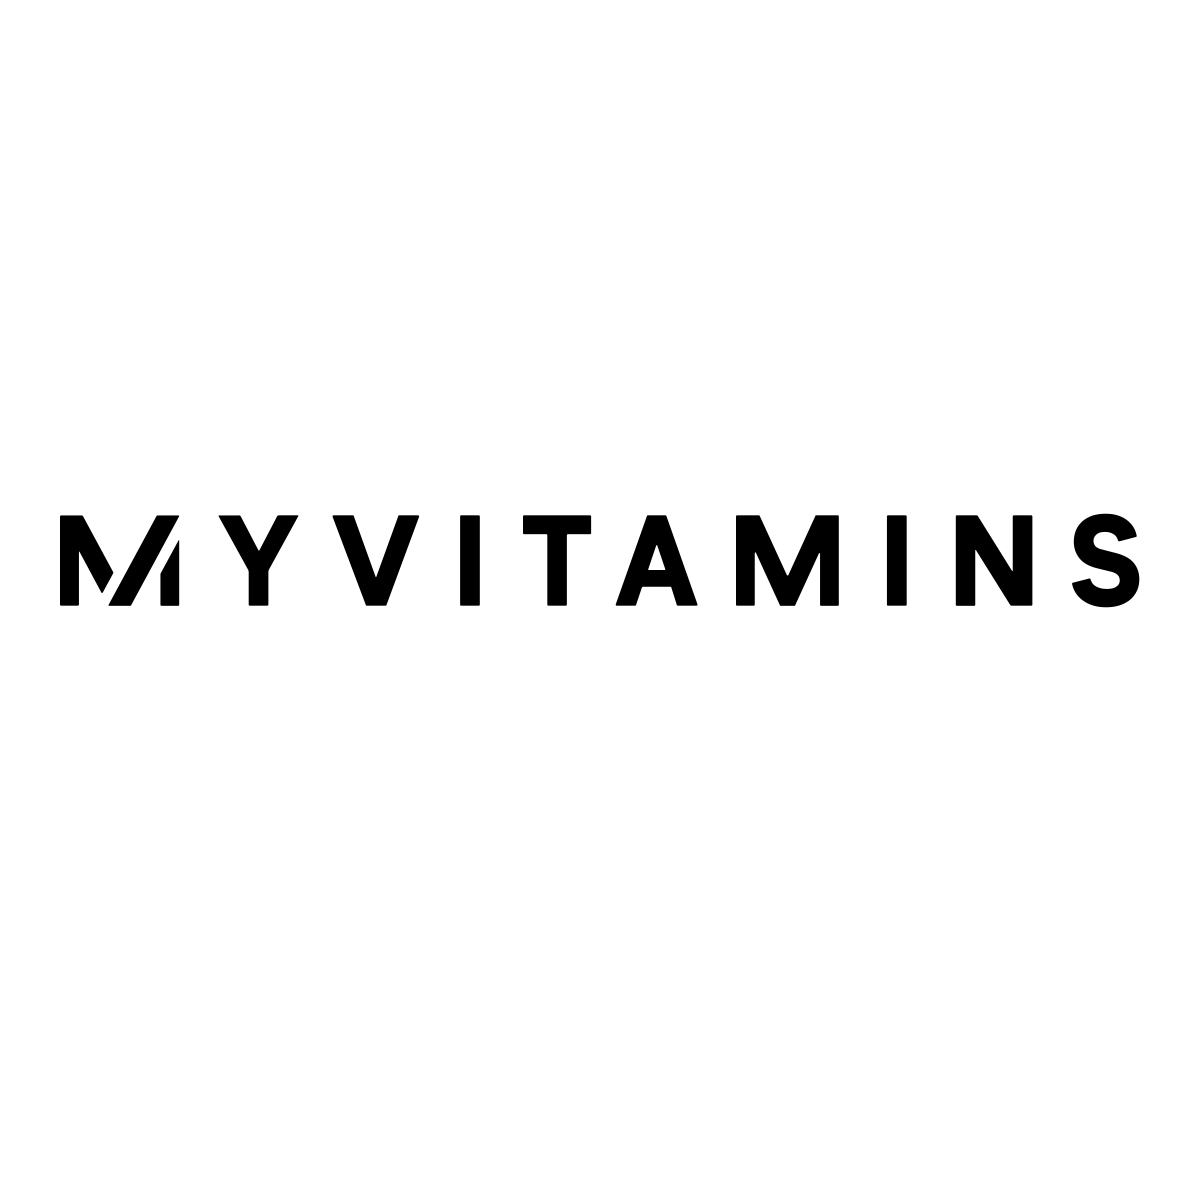 Myvitamins Coupons & Promo Codes